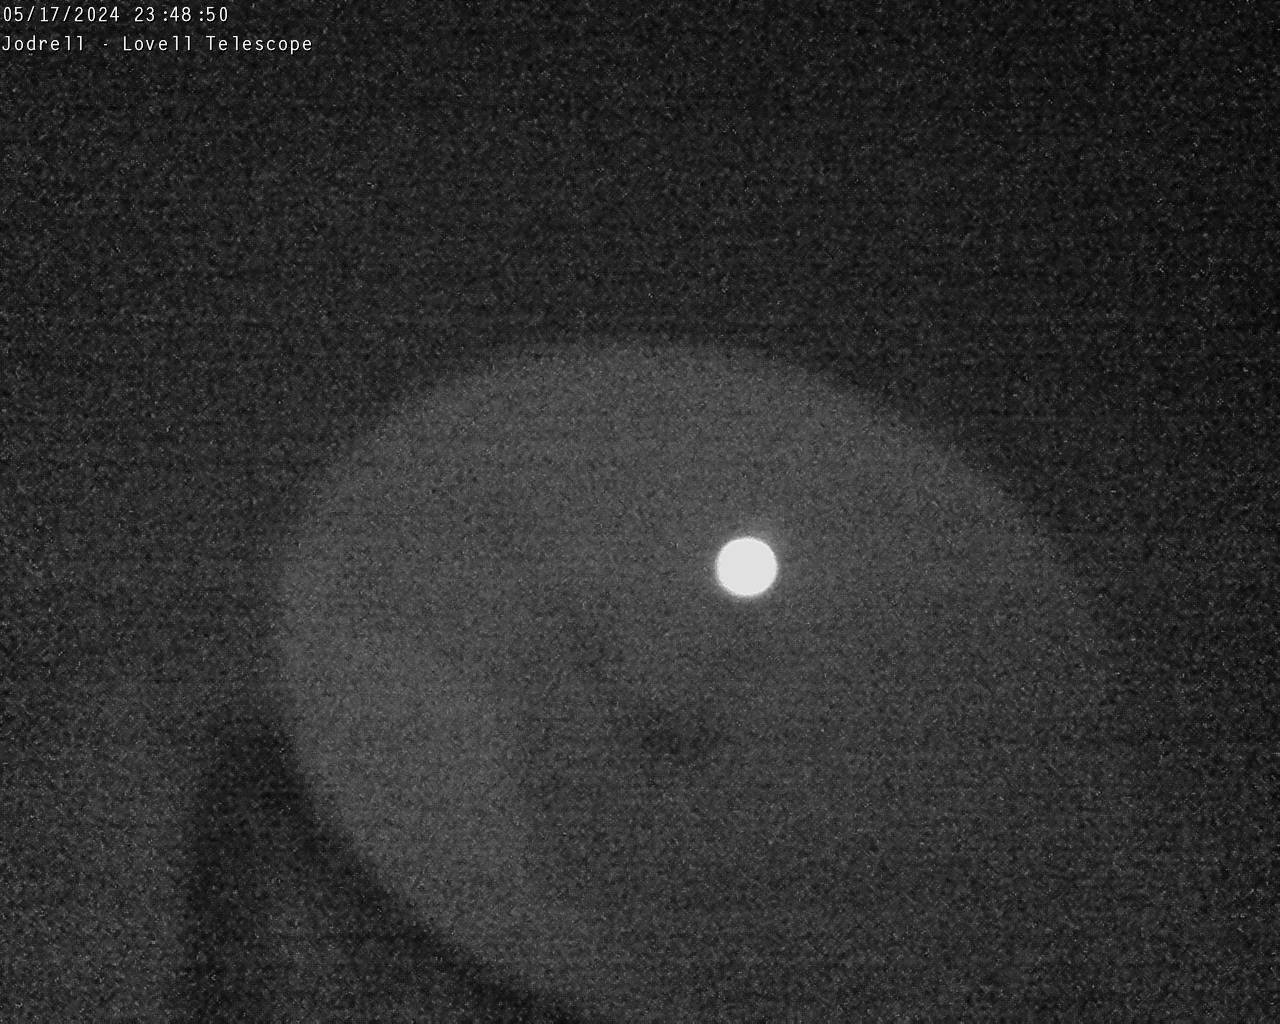 Observatoire de Jodrell Bank Ve. 23:49